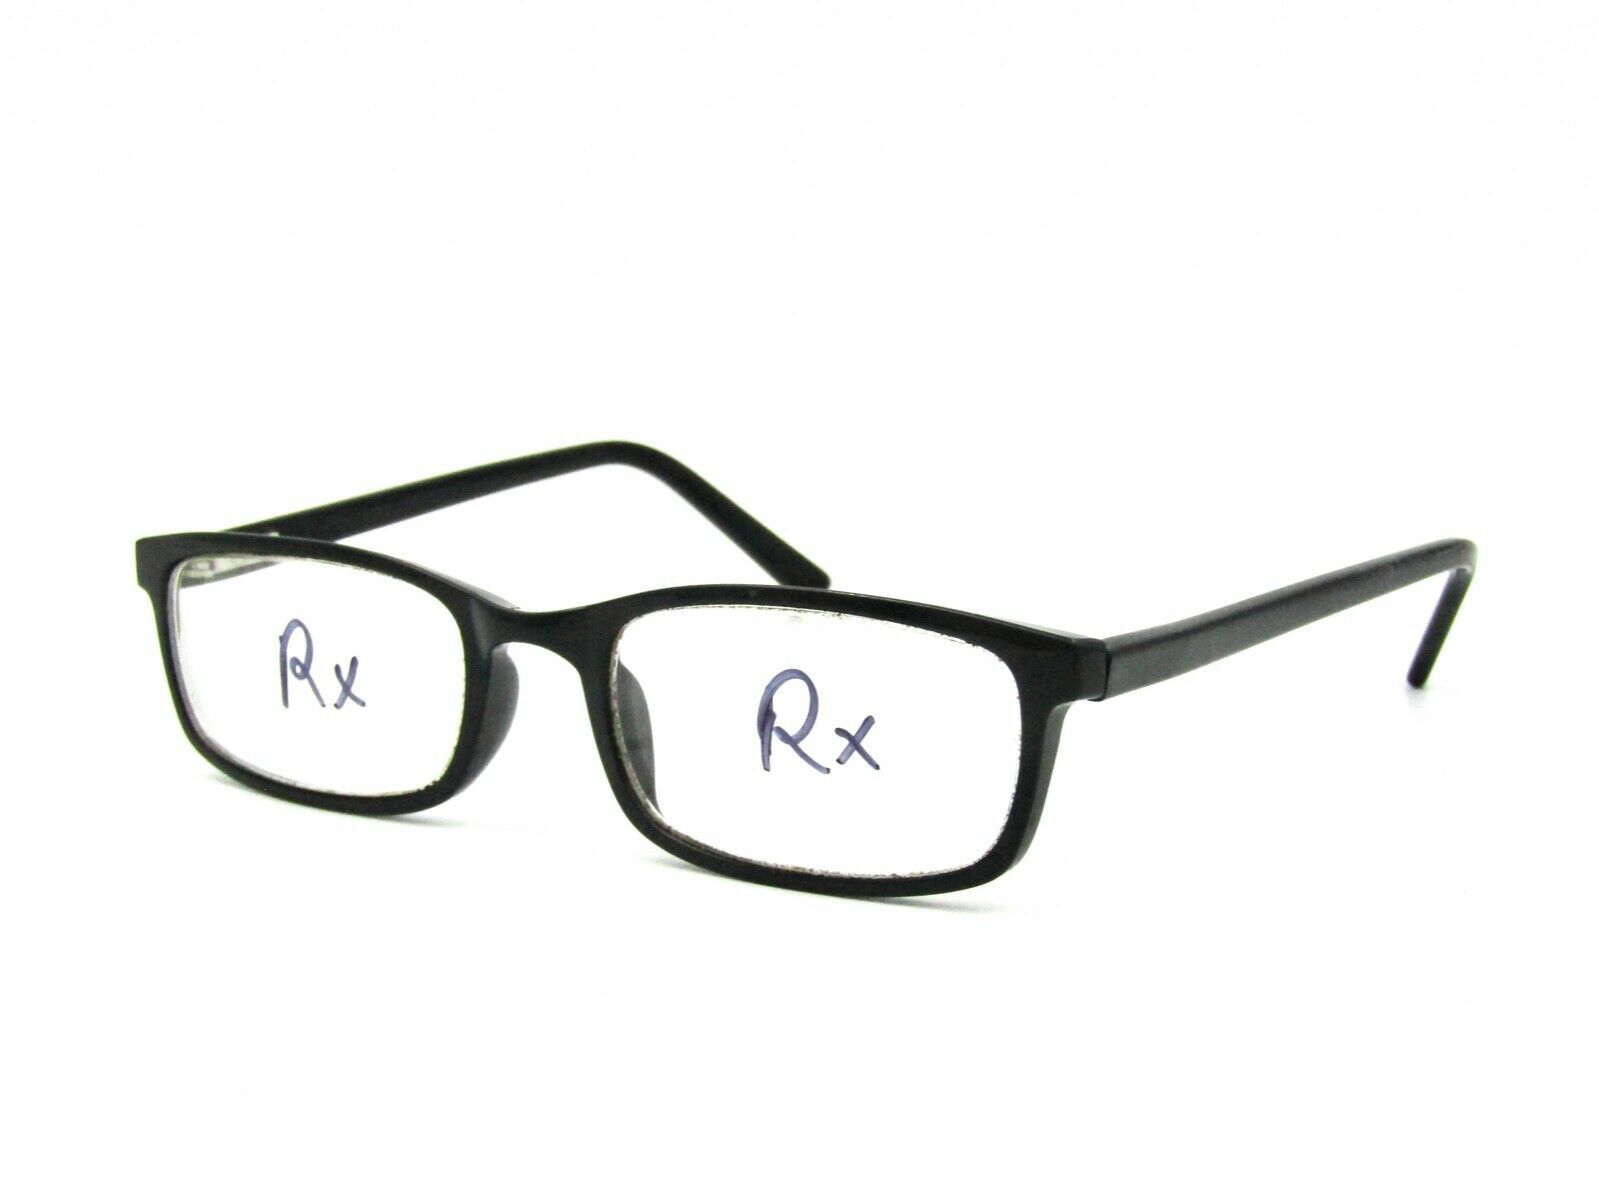 Rochester 145mm 5a Military Eyeglasses Frame Black 52 20 145 71o Eyeglass Frames